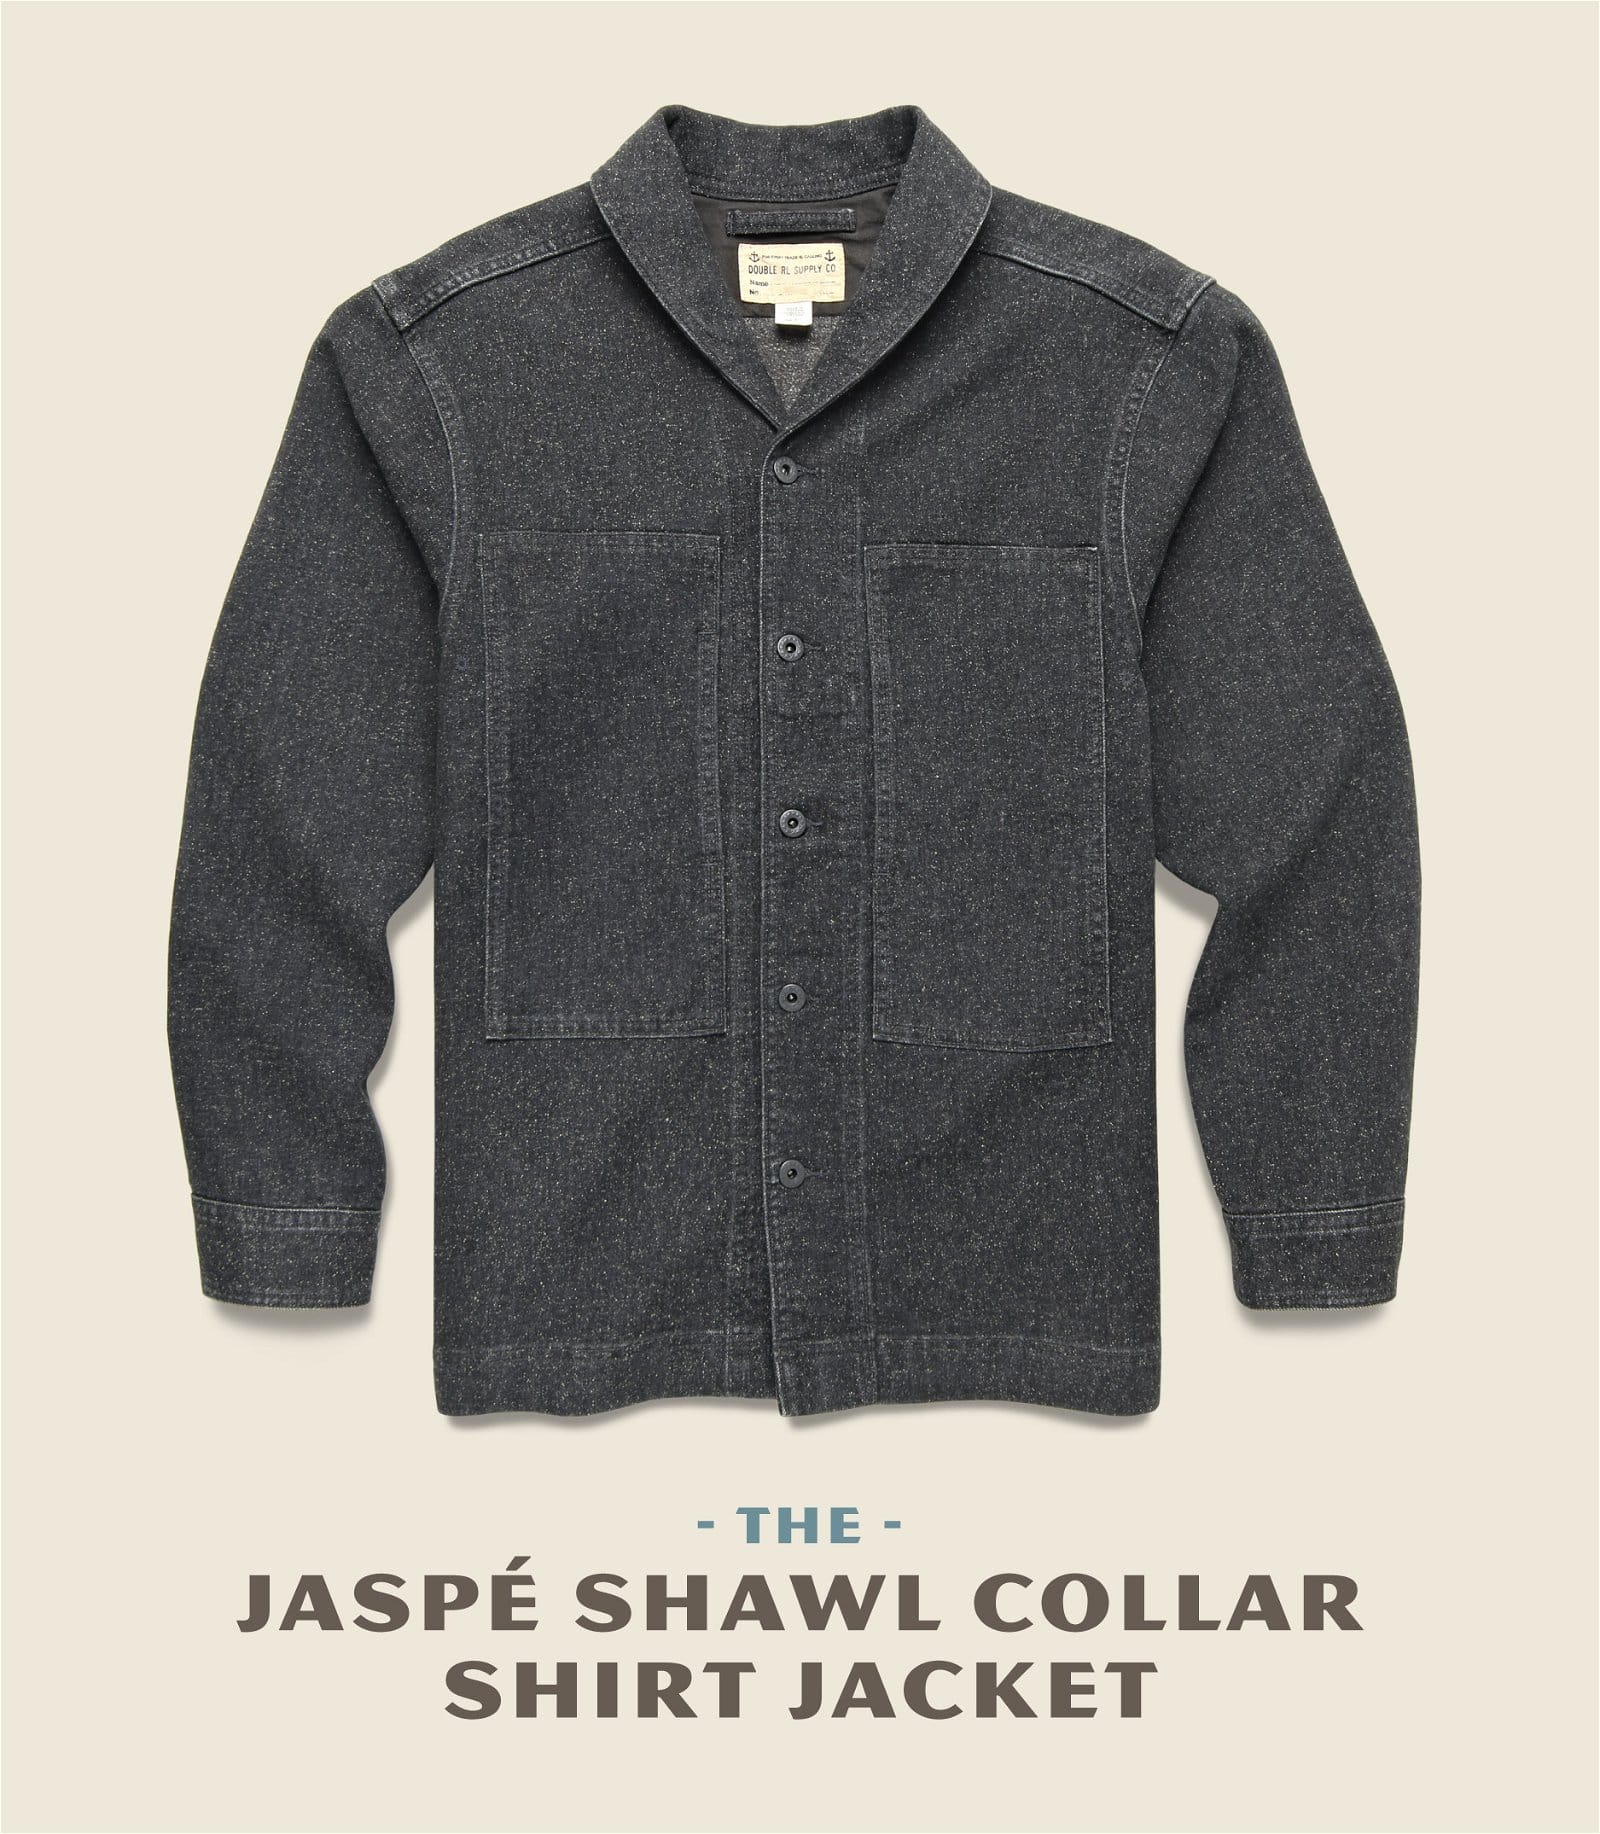 The Jaspe Shawl Collar Shirt Jacket